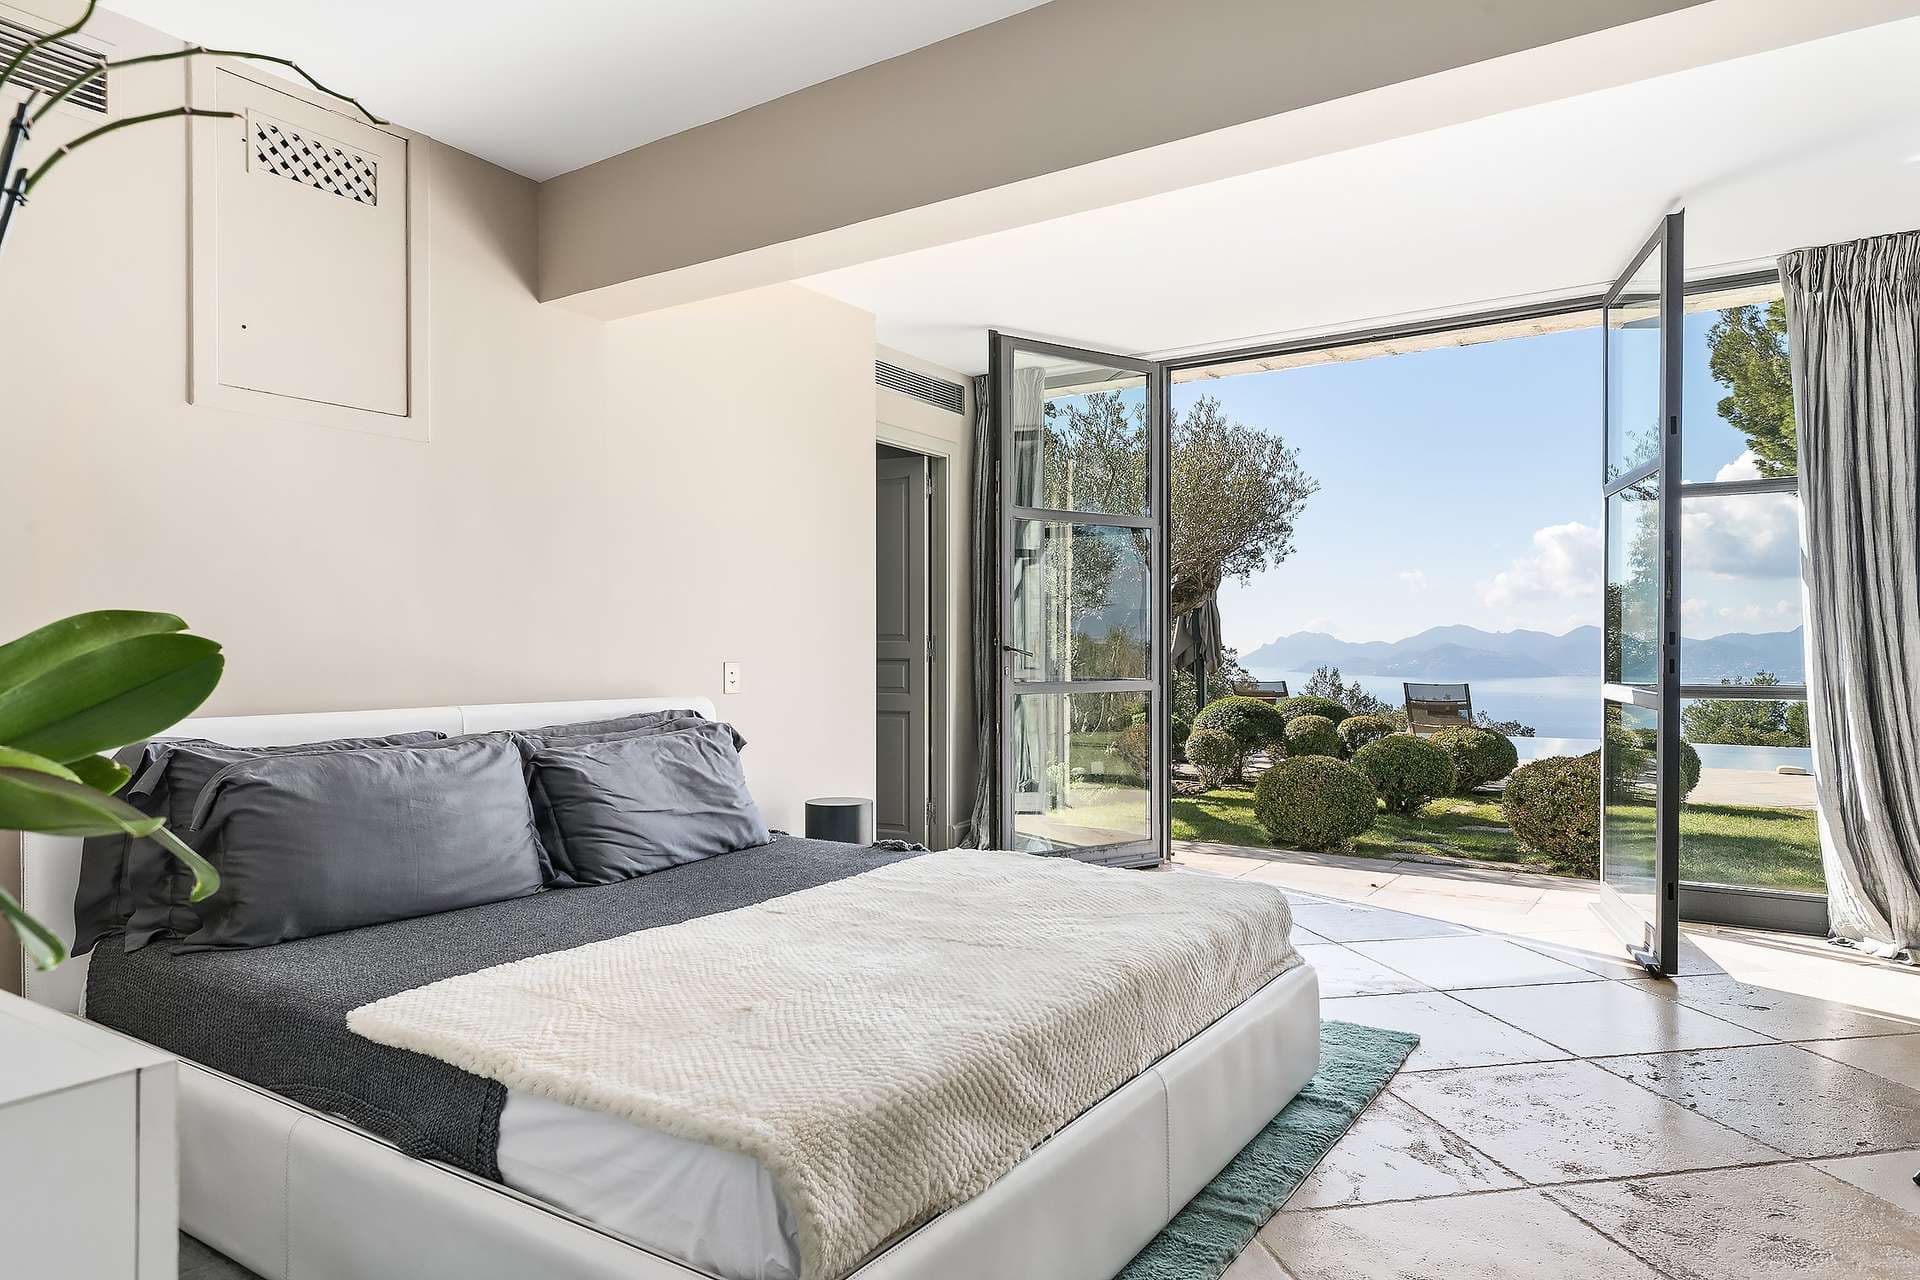 6 Bedroom Villa For Sale Cannes Lp0990 2515824413f09200.jpg